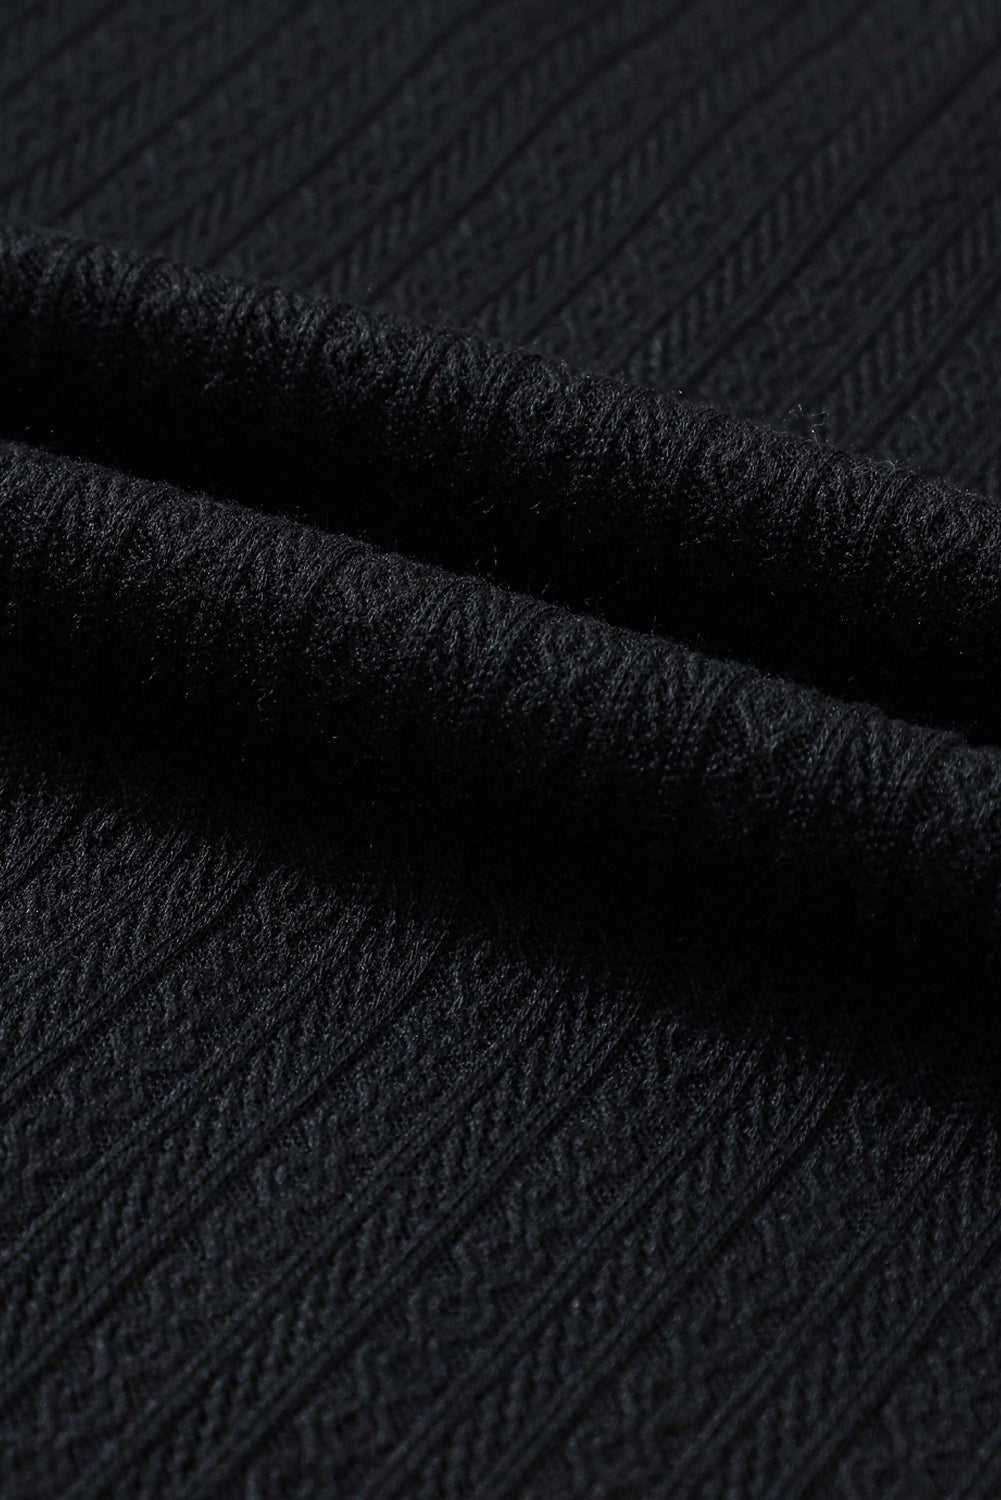 Black Faux Knit Jacquard Puffy Long Sleeve Top